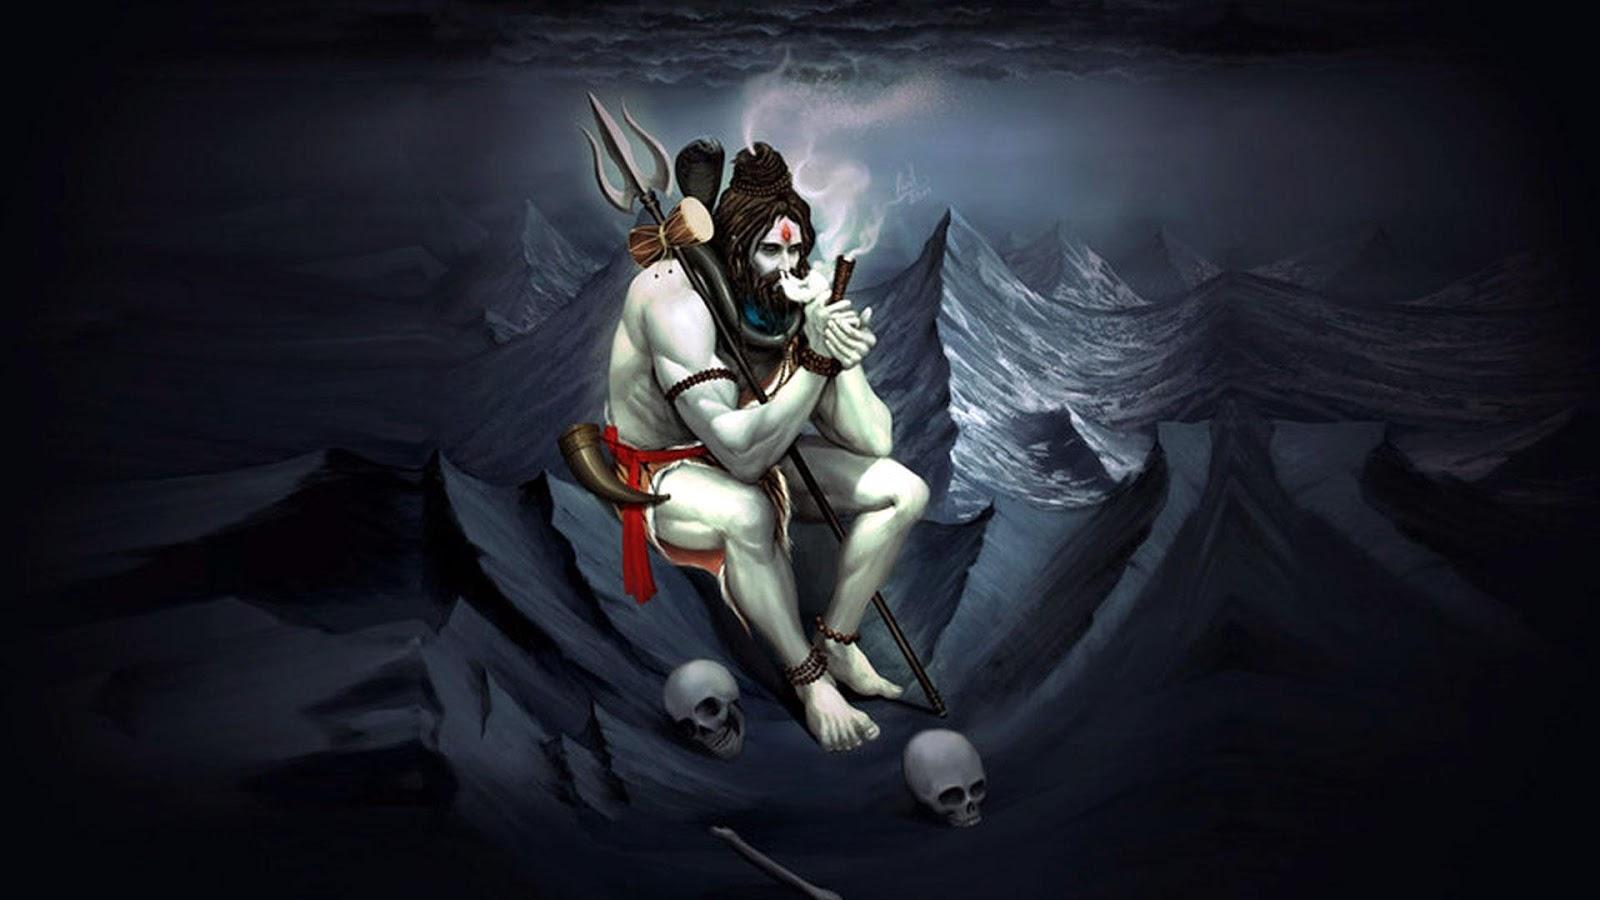 Lord Shiva image, wallpapers, photos & pics, download Lord Shiva